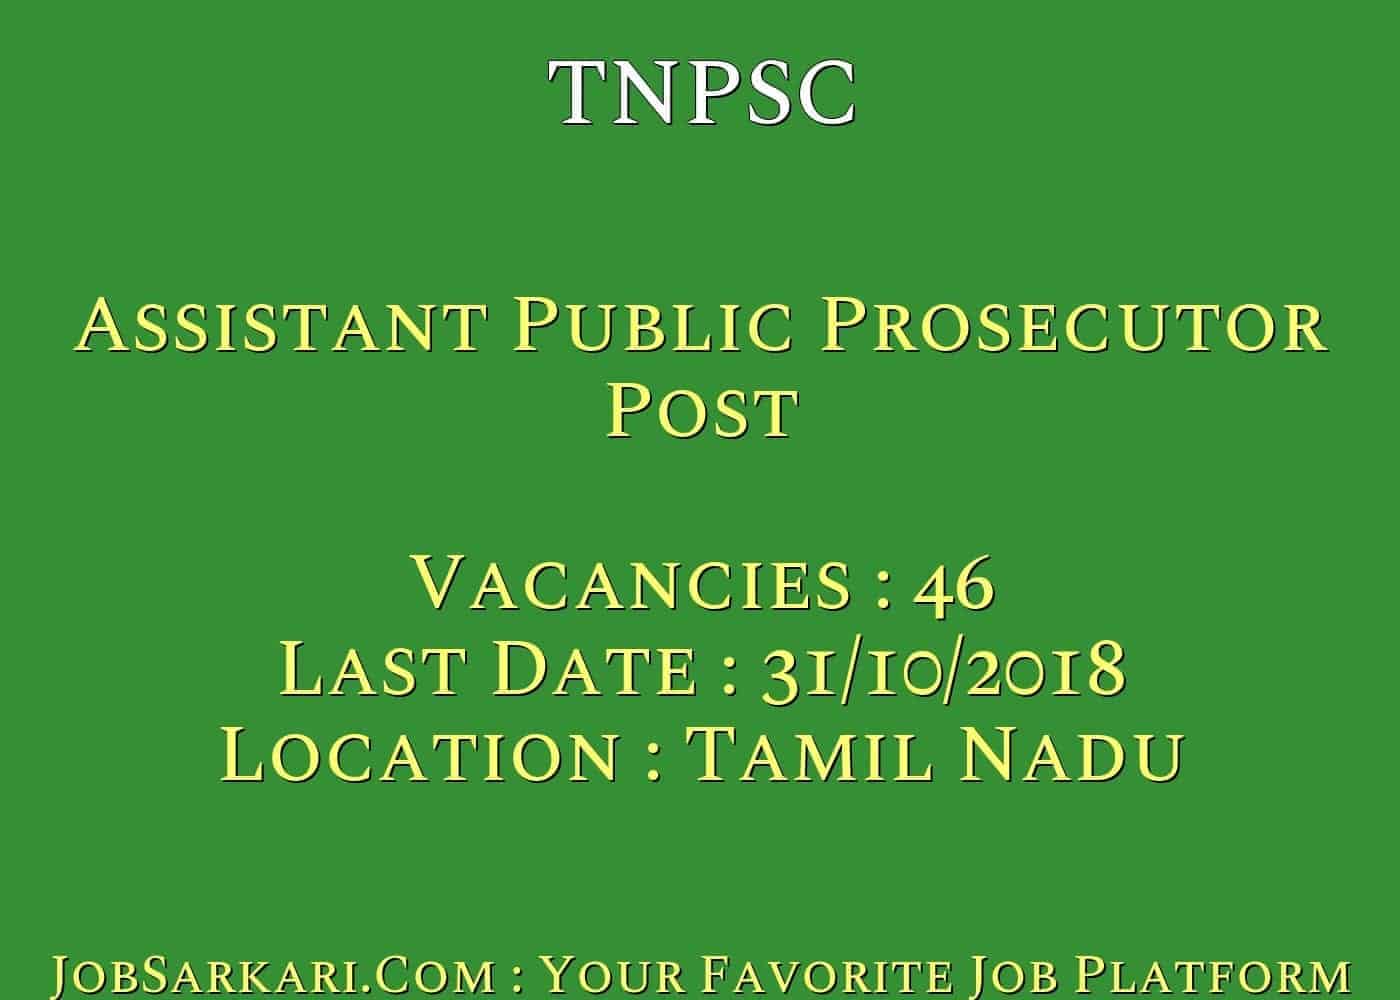 TNPSC Recruitment 2018 for Assistant Public Prosecutor Post